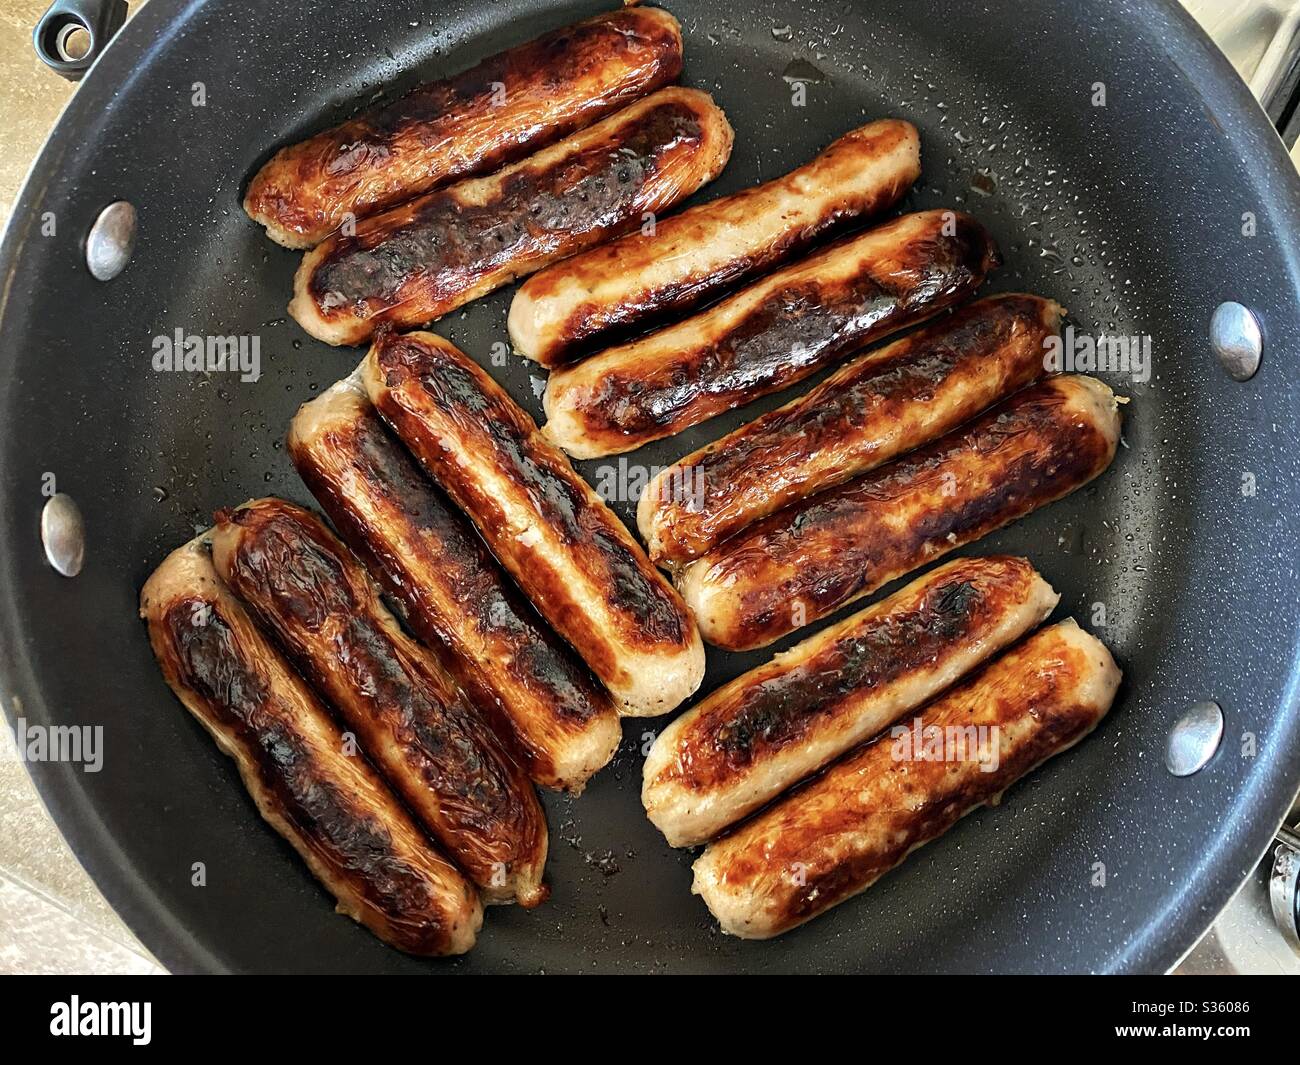 Contoured Sausage-Only Cooking Pans : Sausage Fry Pan